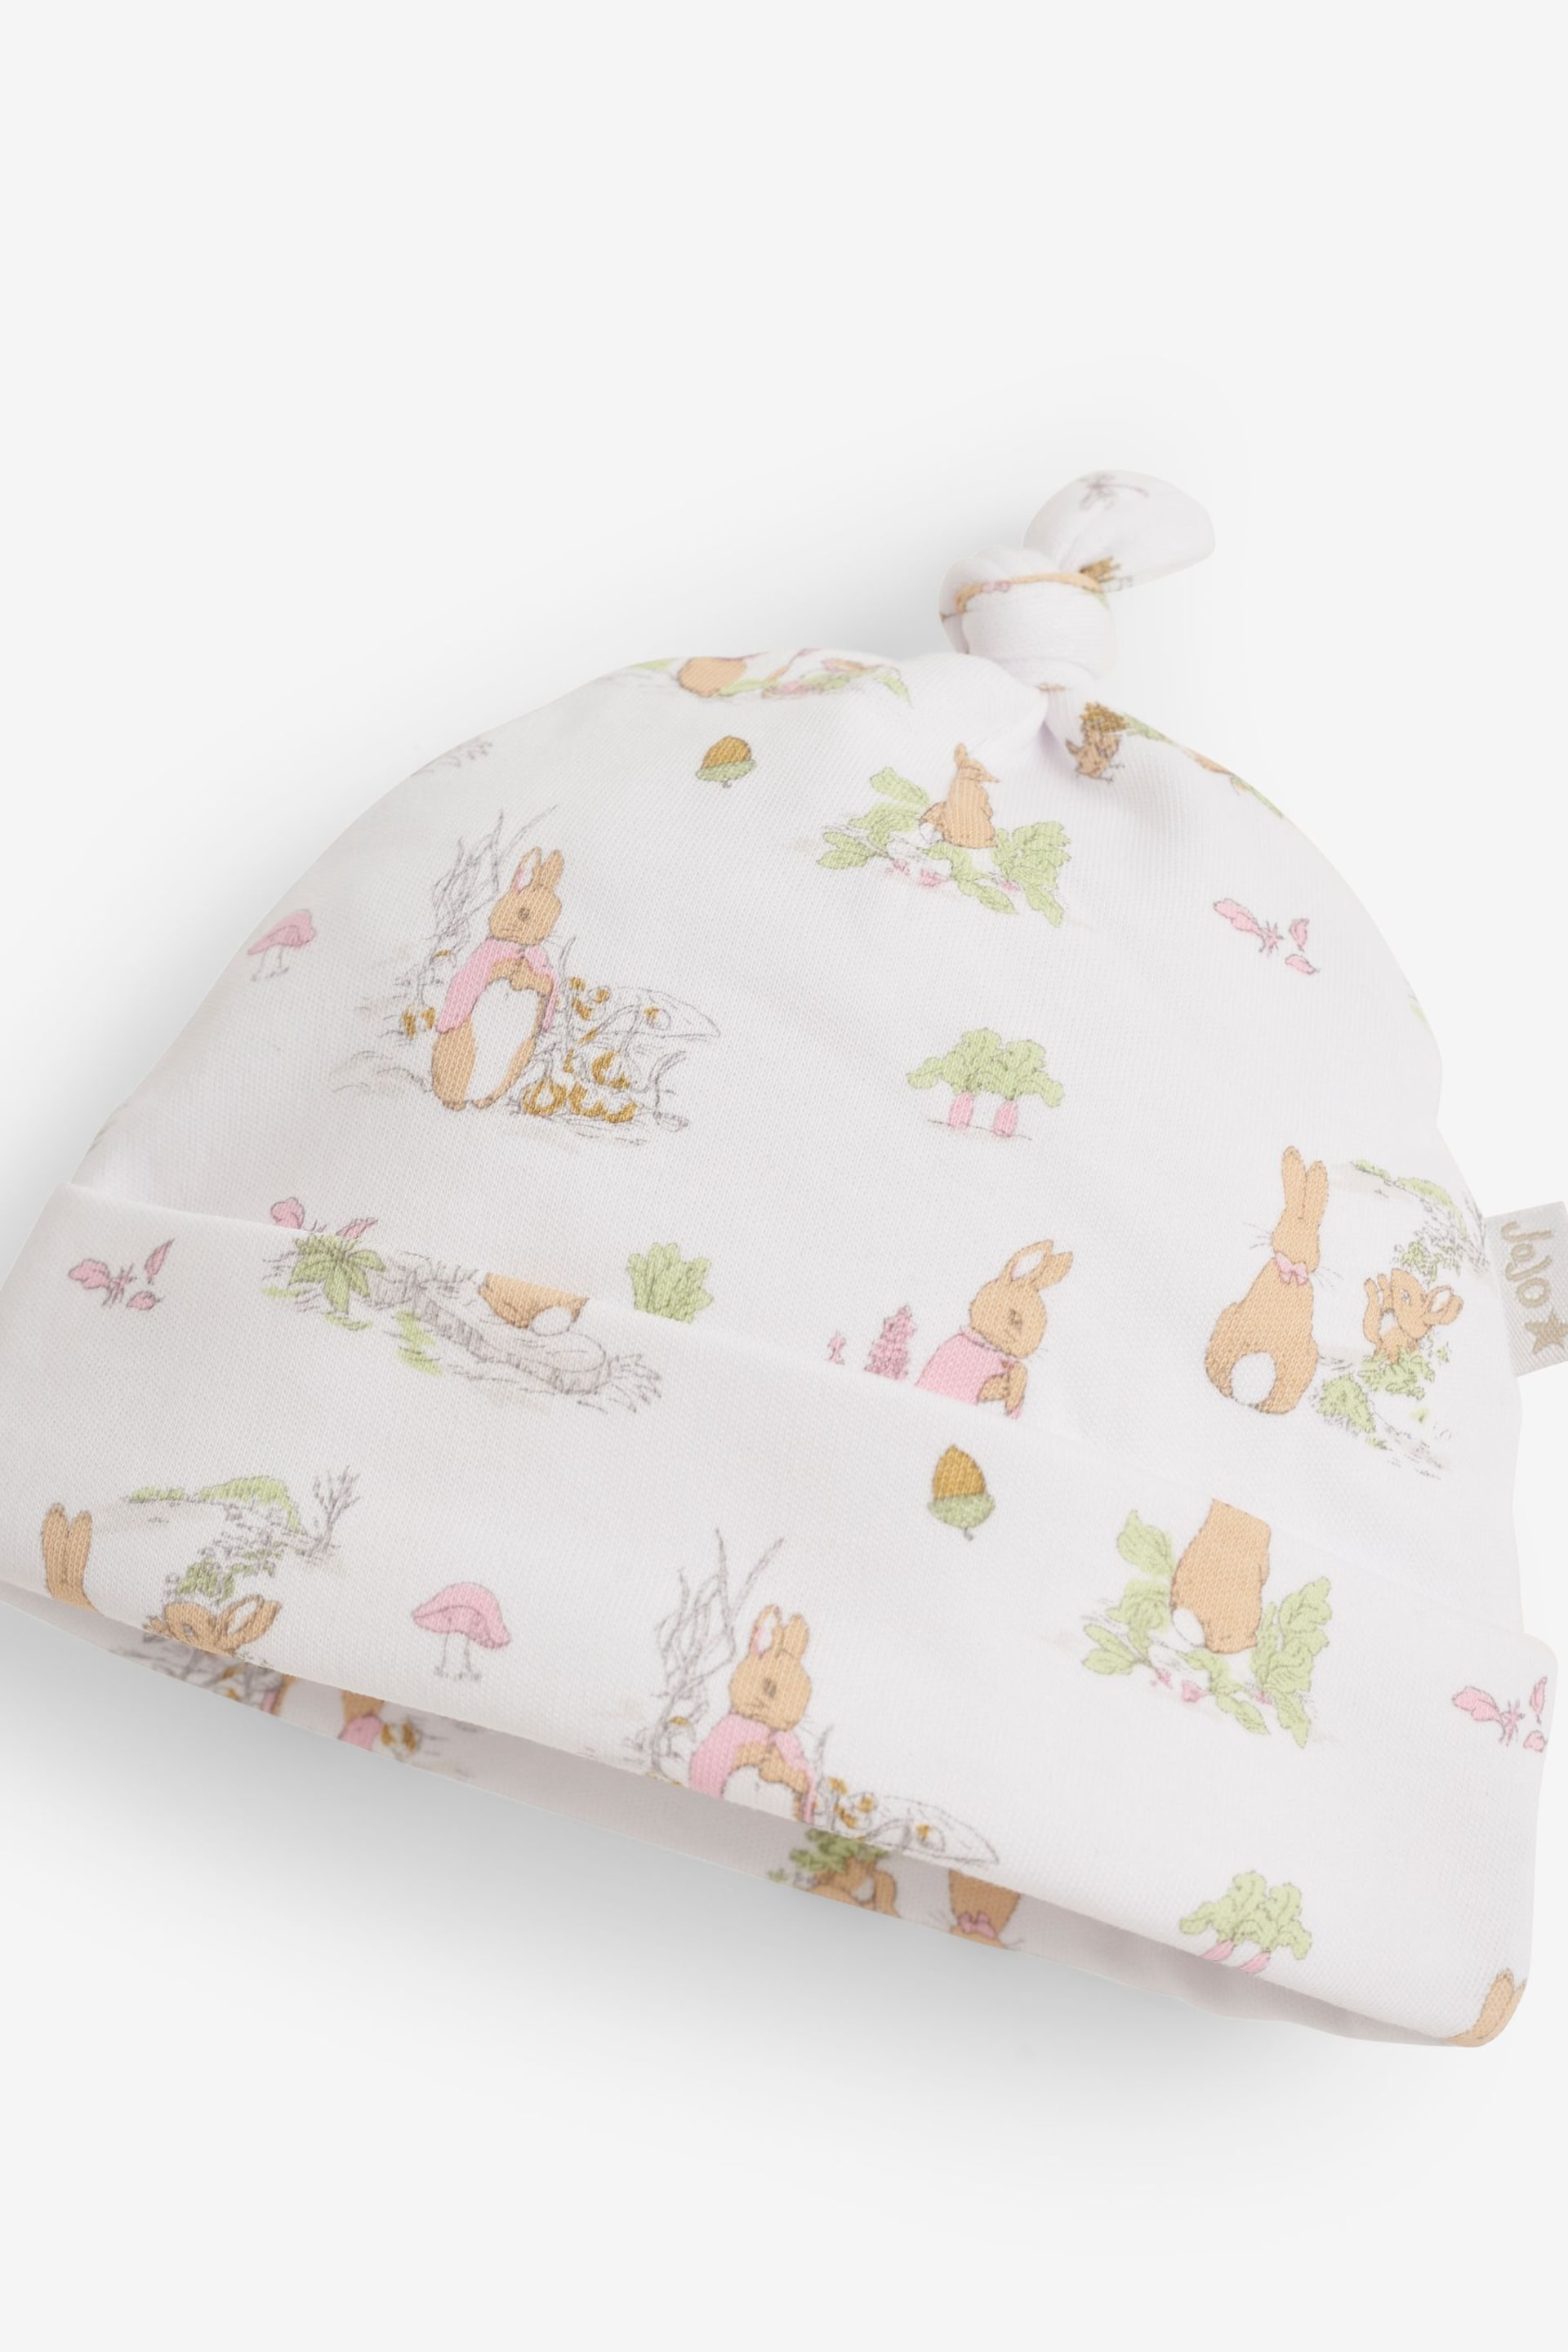 JoJo Maman Bébé Pink 3-Piece Flopsy Bunny Sleepsuit, Jacket & Hat Set - Image 7 of 9